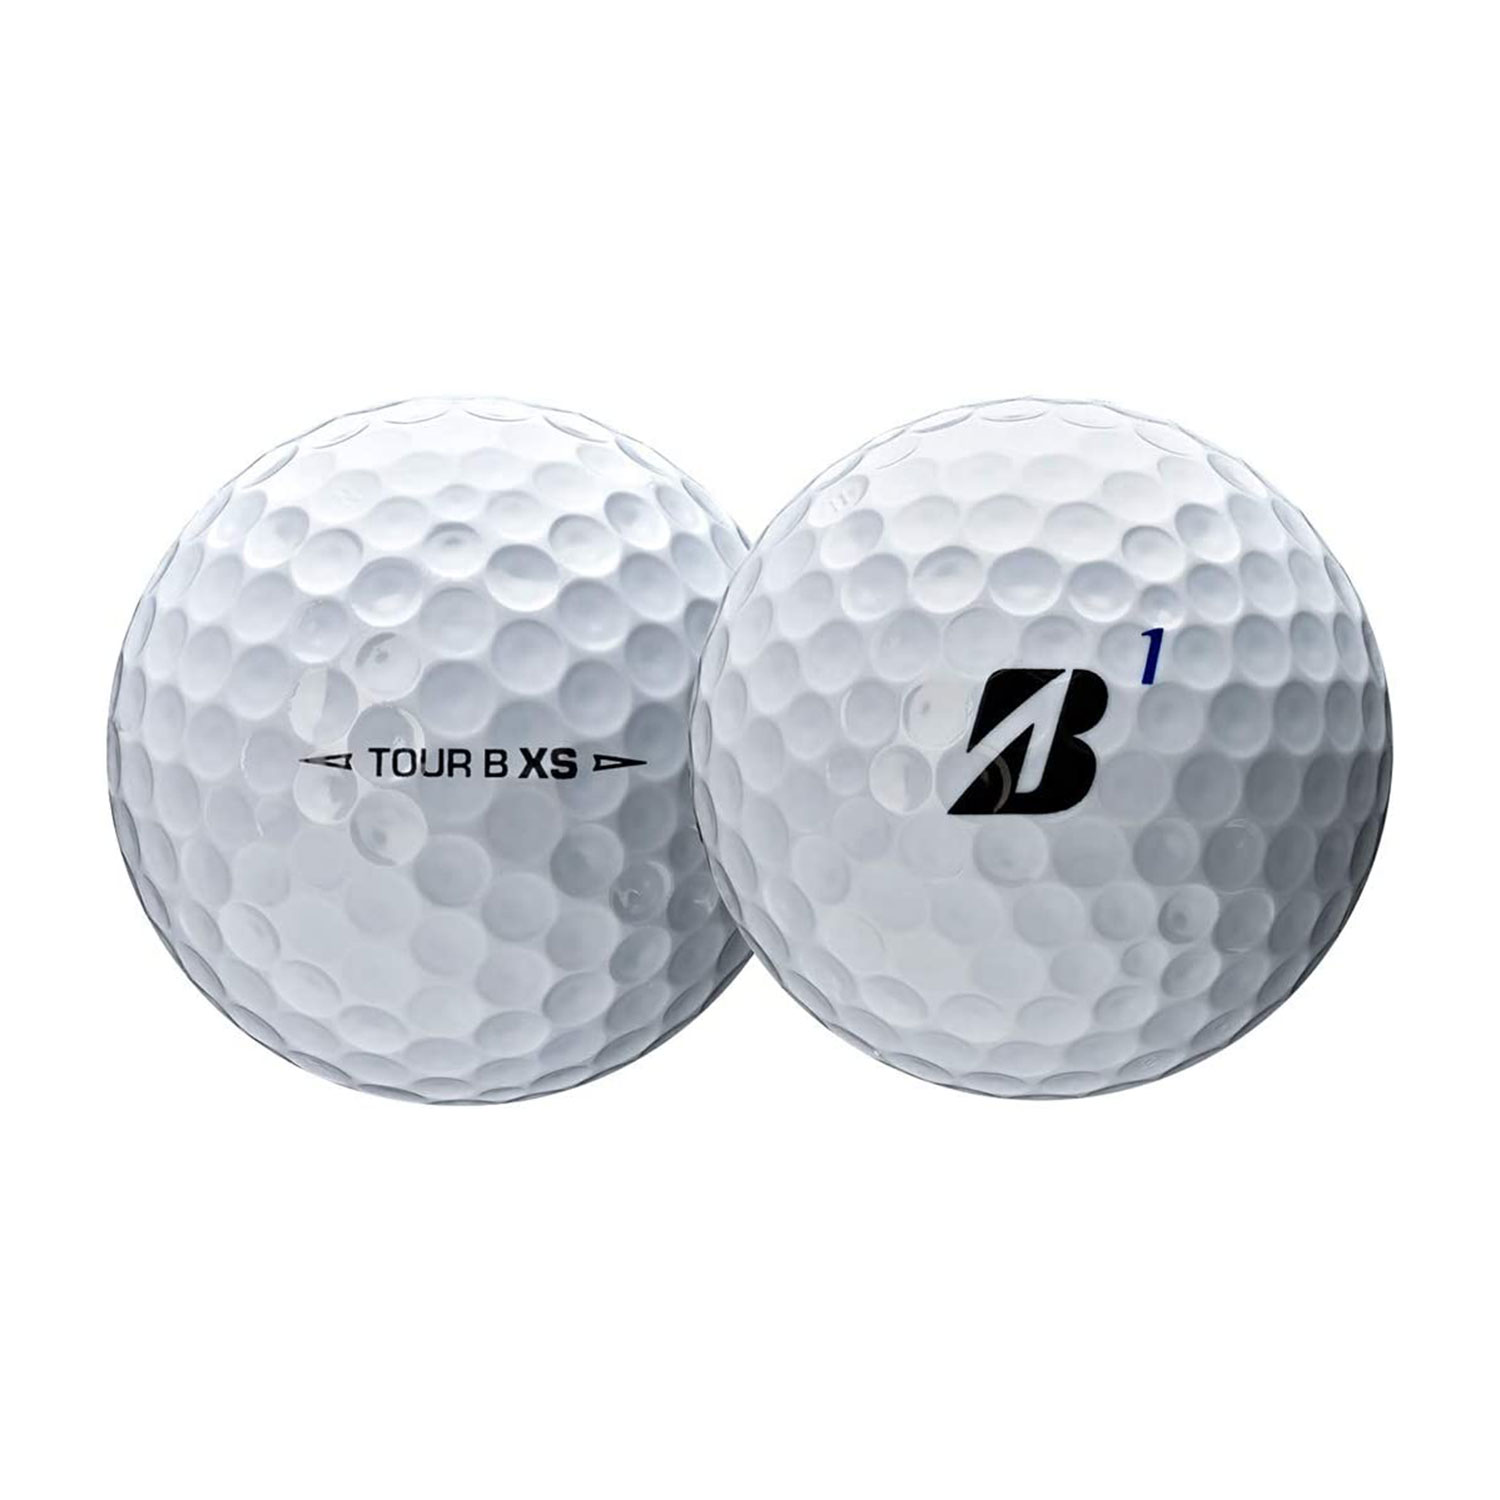 Bridgestone Golf Tour B XS Model Soft Distance Golf Balls, Yellow, 1 Dozen - image 2 of 5